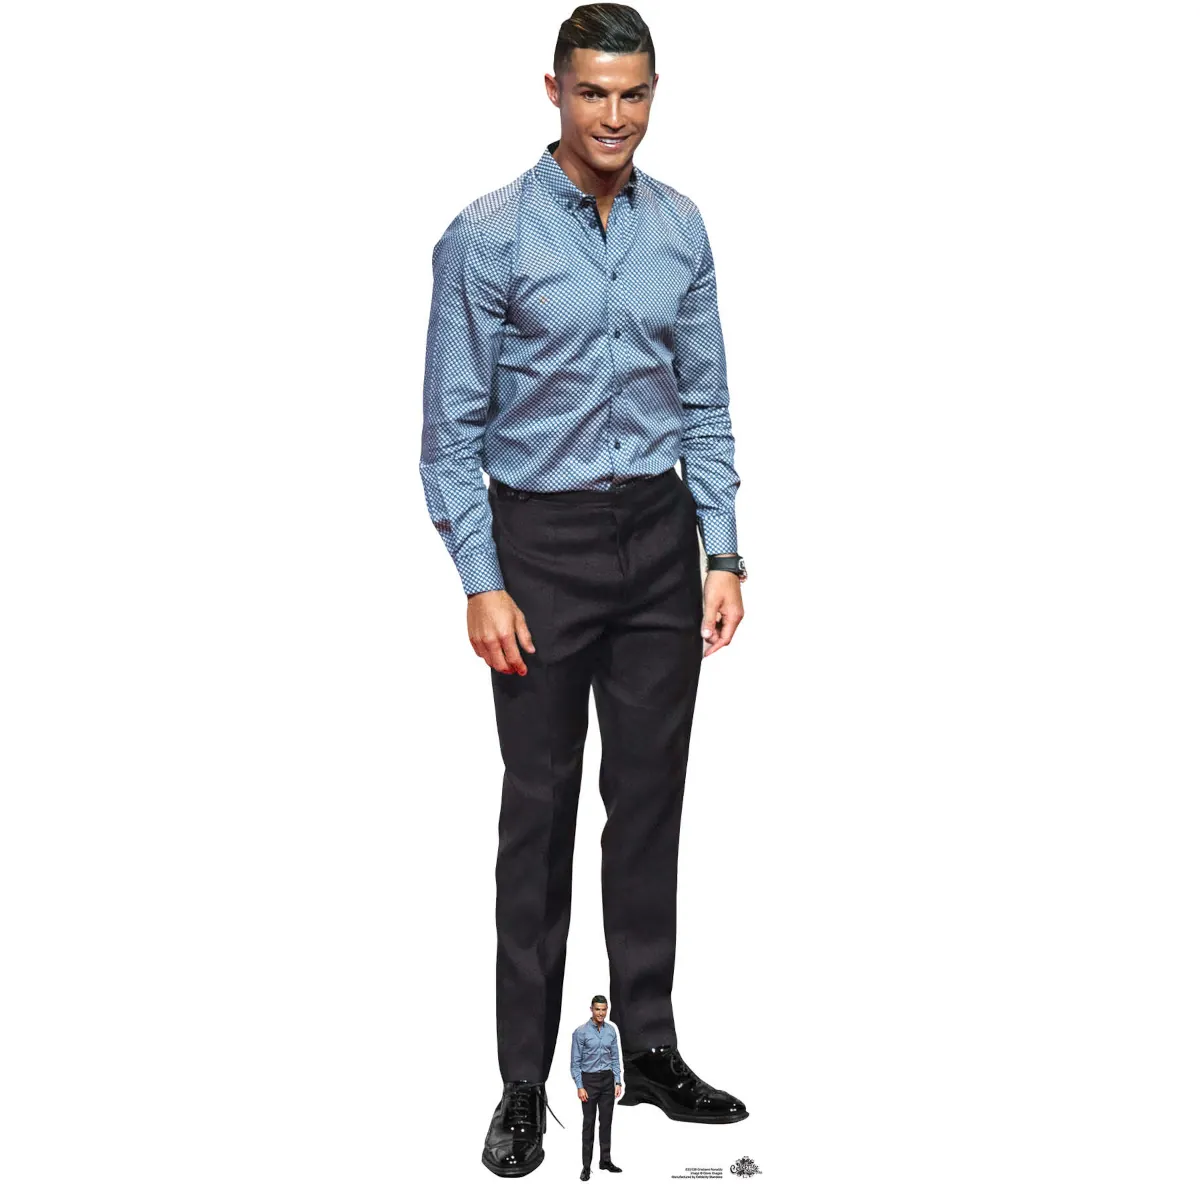 CS1138 Cristiano Ronaldo 'Blue Shirt' (Portuguese Footballer) Lifesize + Mini Cardboard Cutout Standee Front